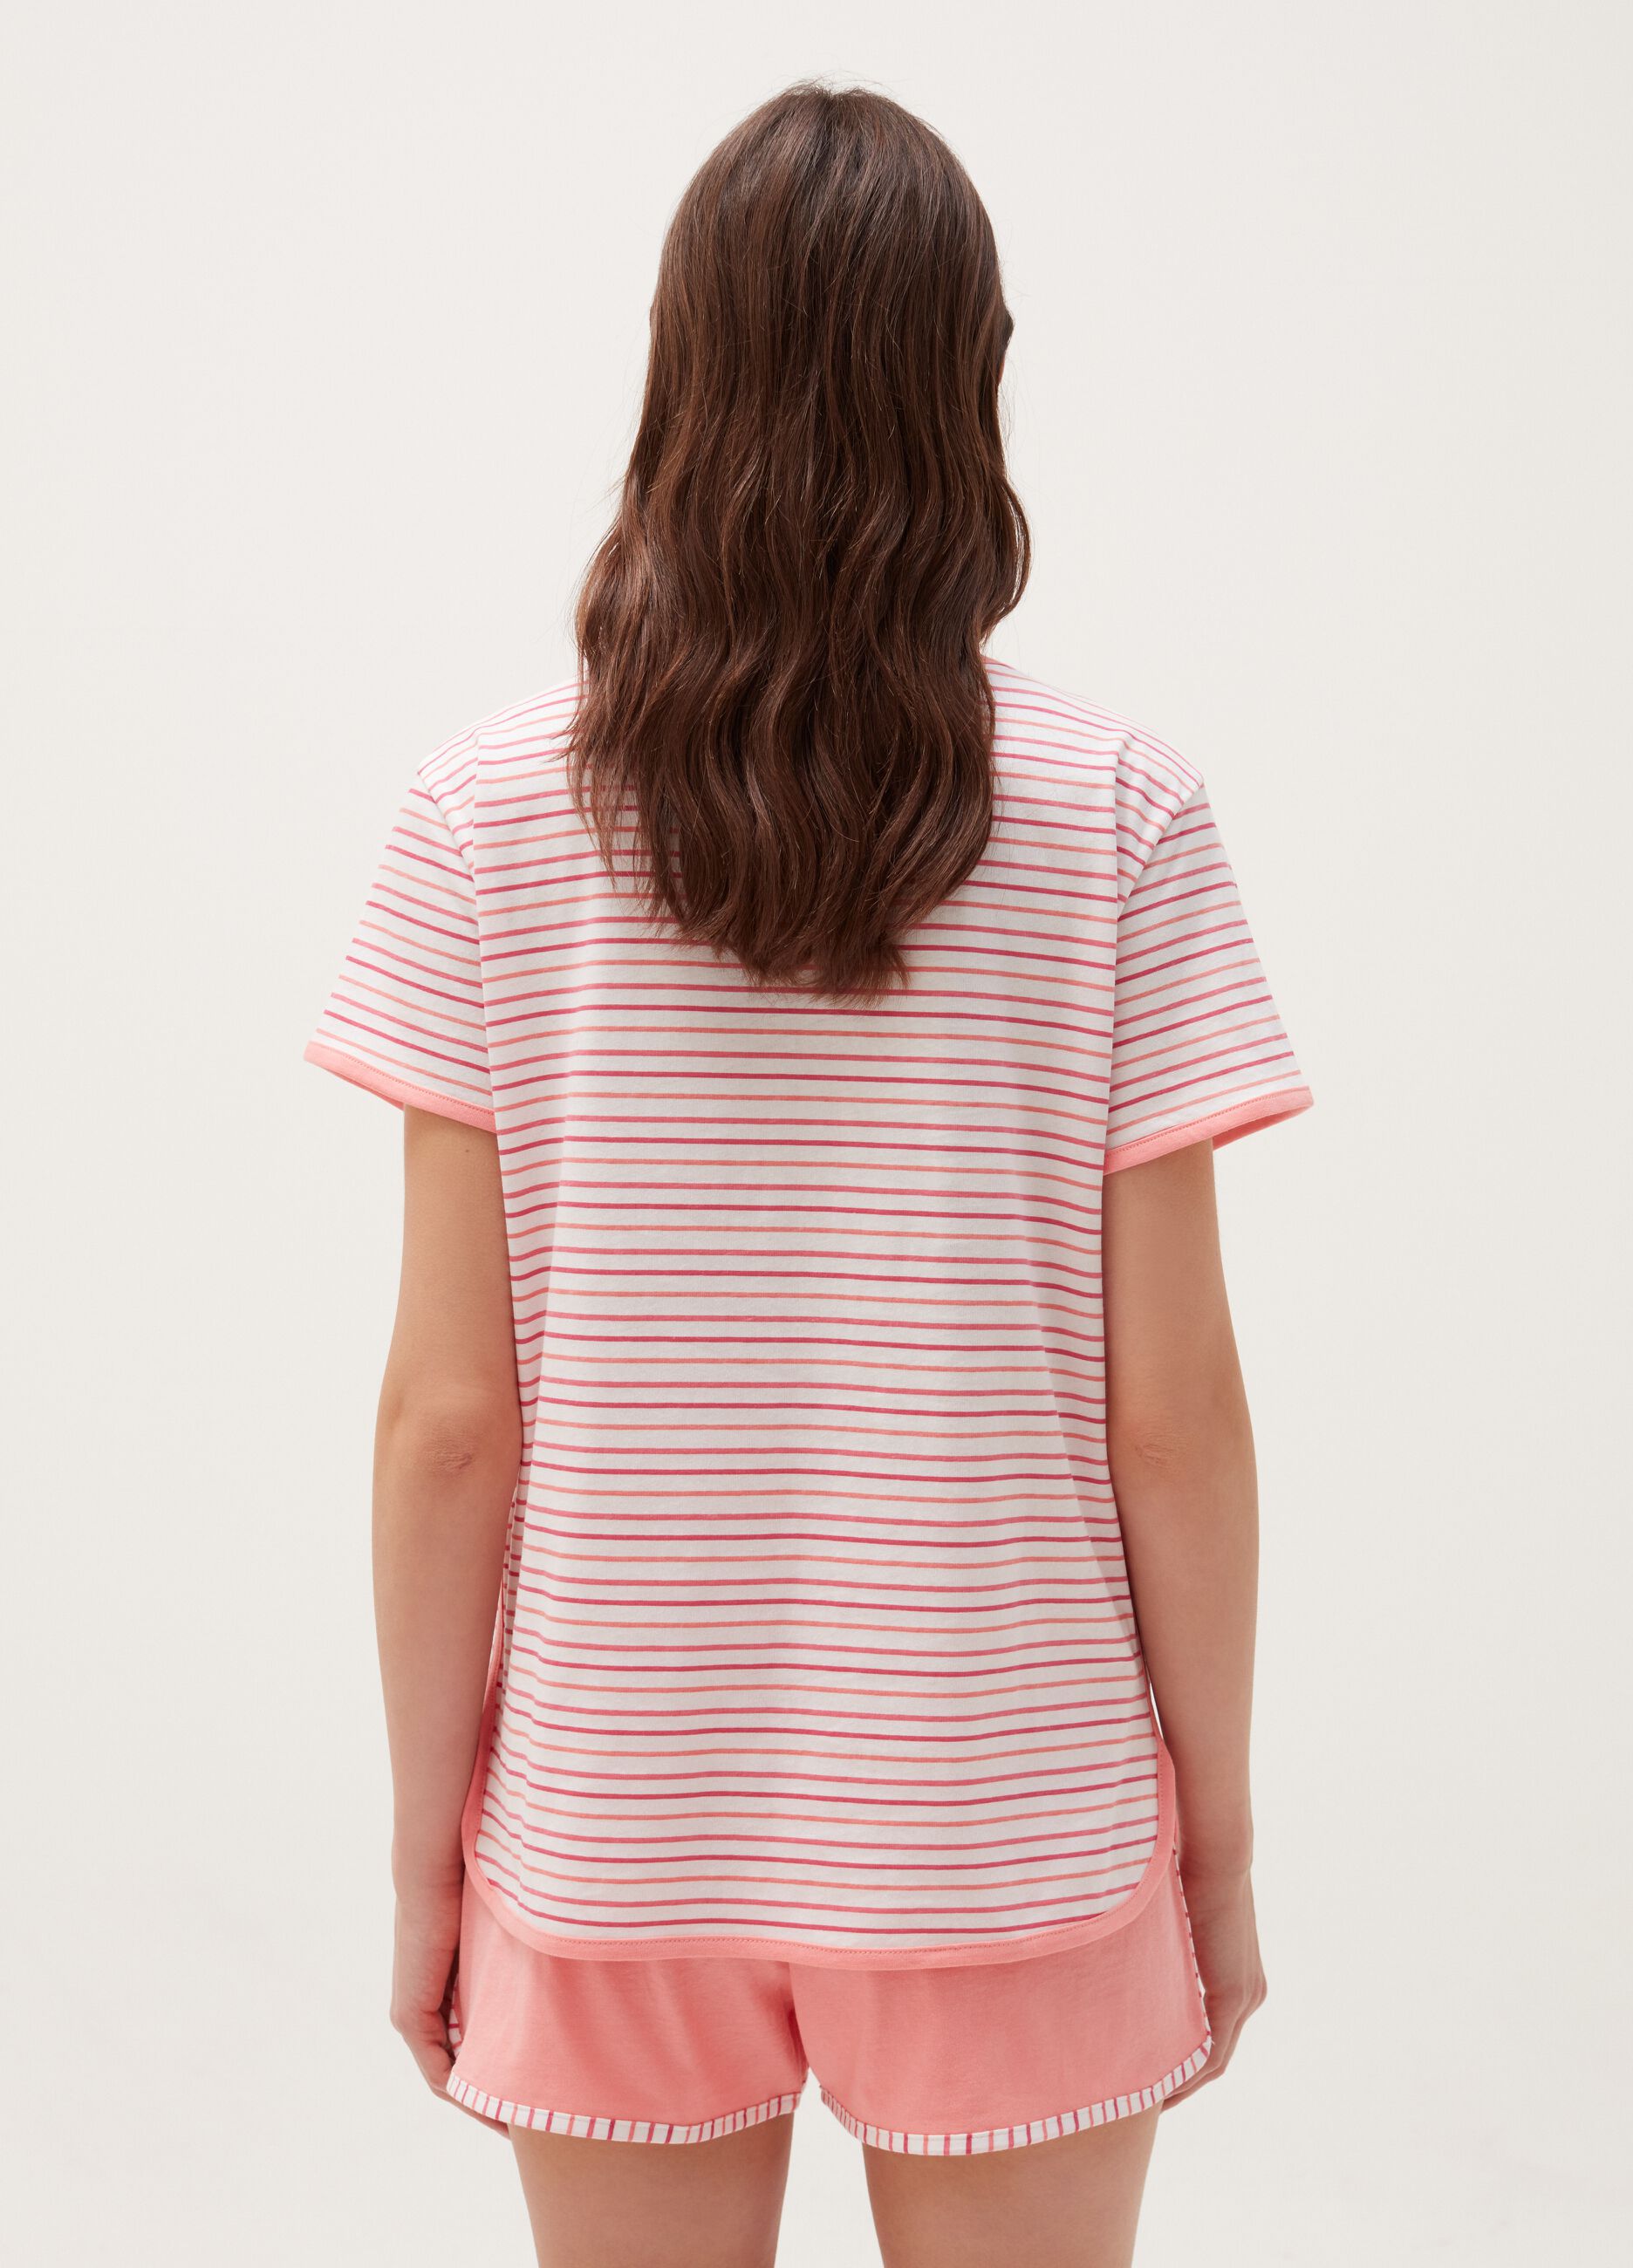 Short cotton pyjamas with striped top